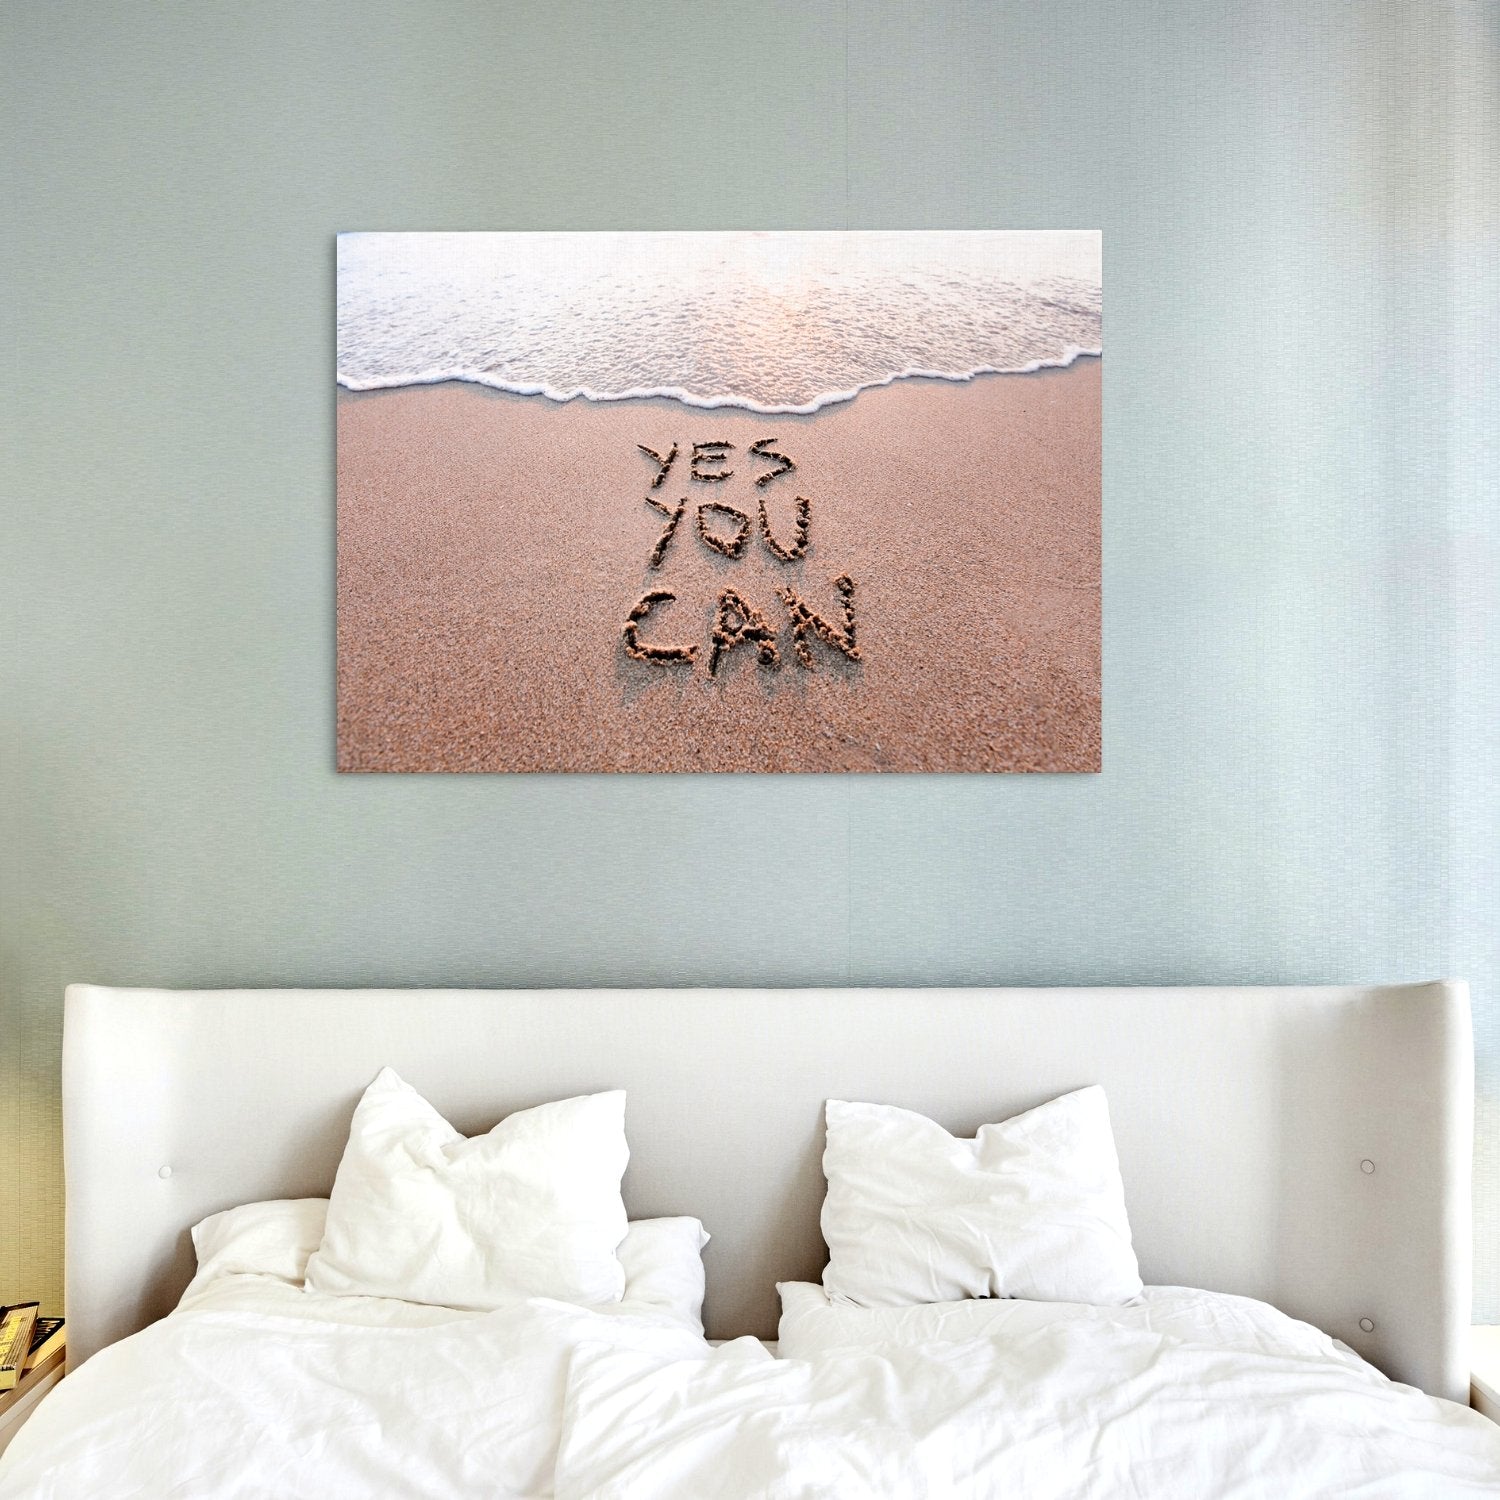 Decorațiune perete canvas " You Can" - Cadouri Personalizate